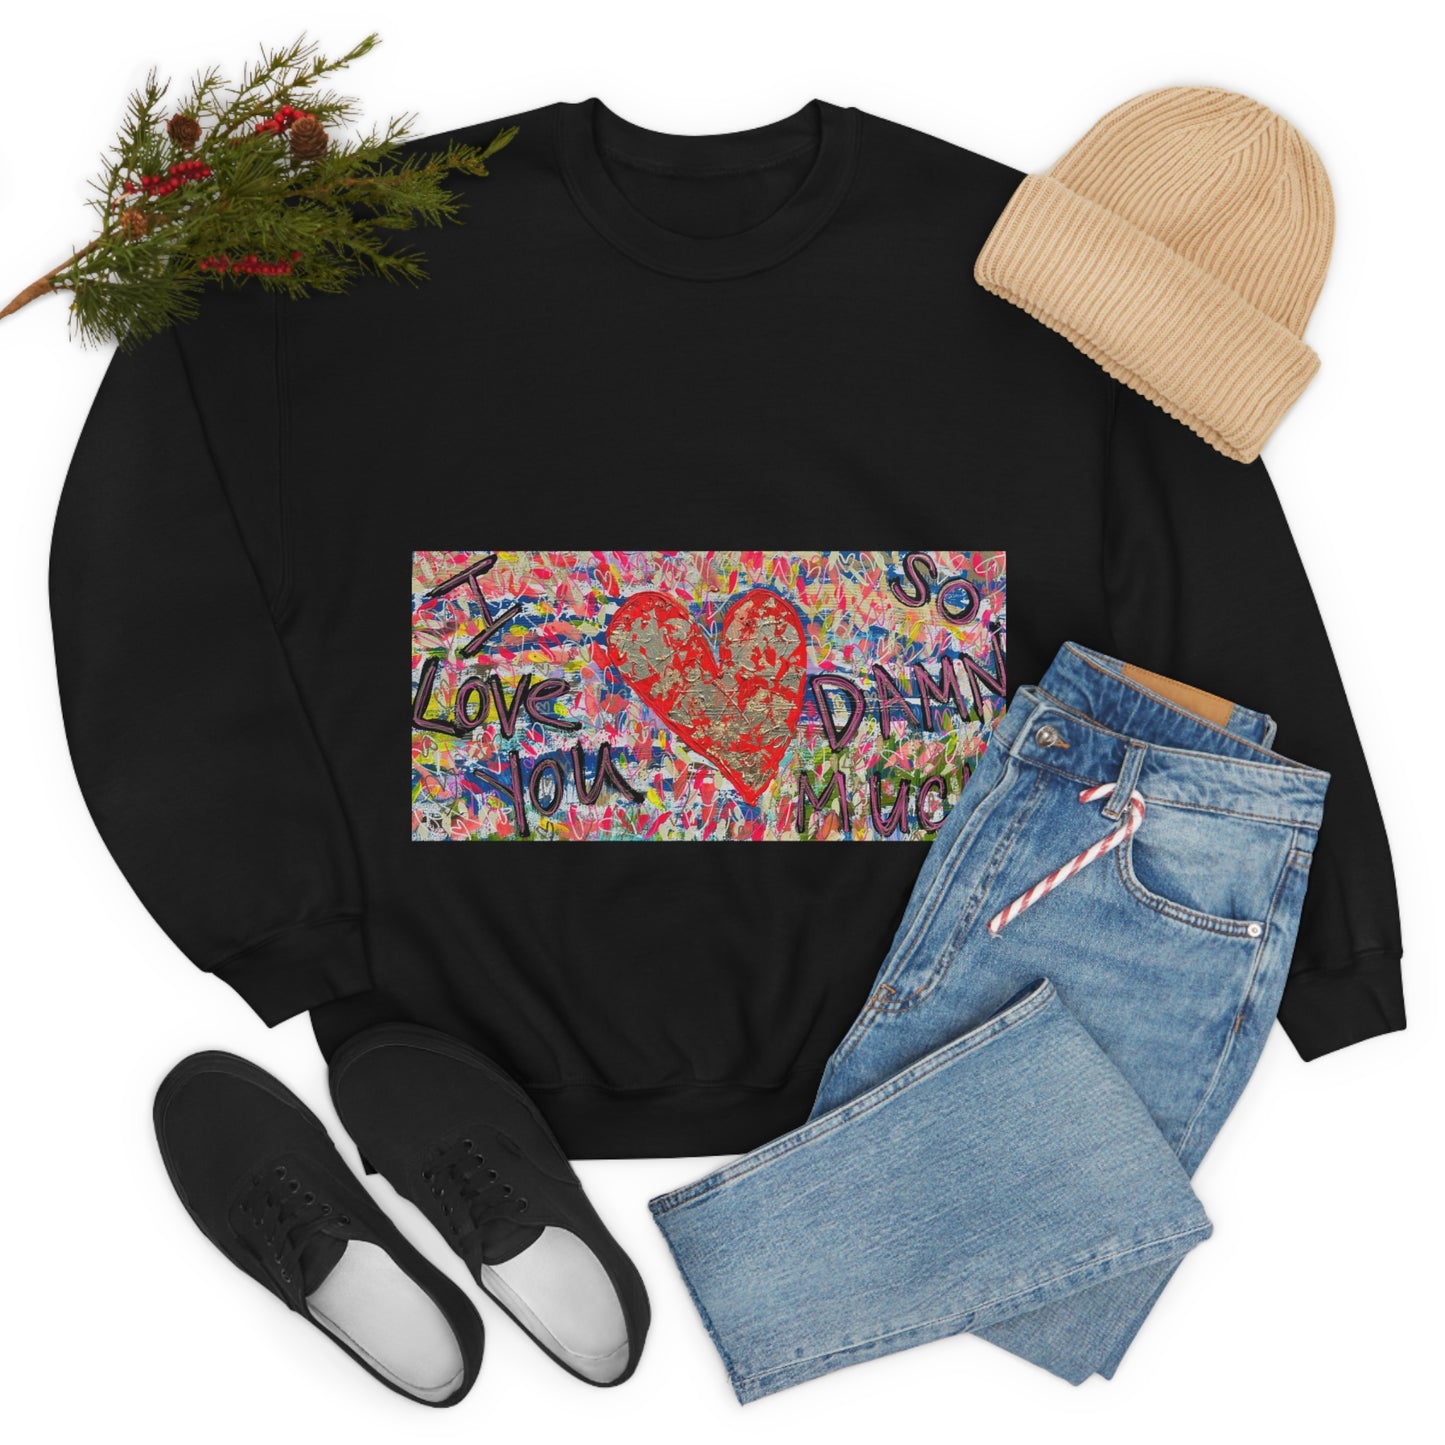 "I Love You So Damn Much" Unisex Heavy Blend Crewneck Sweatshirt